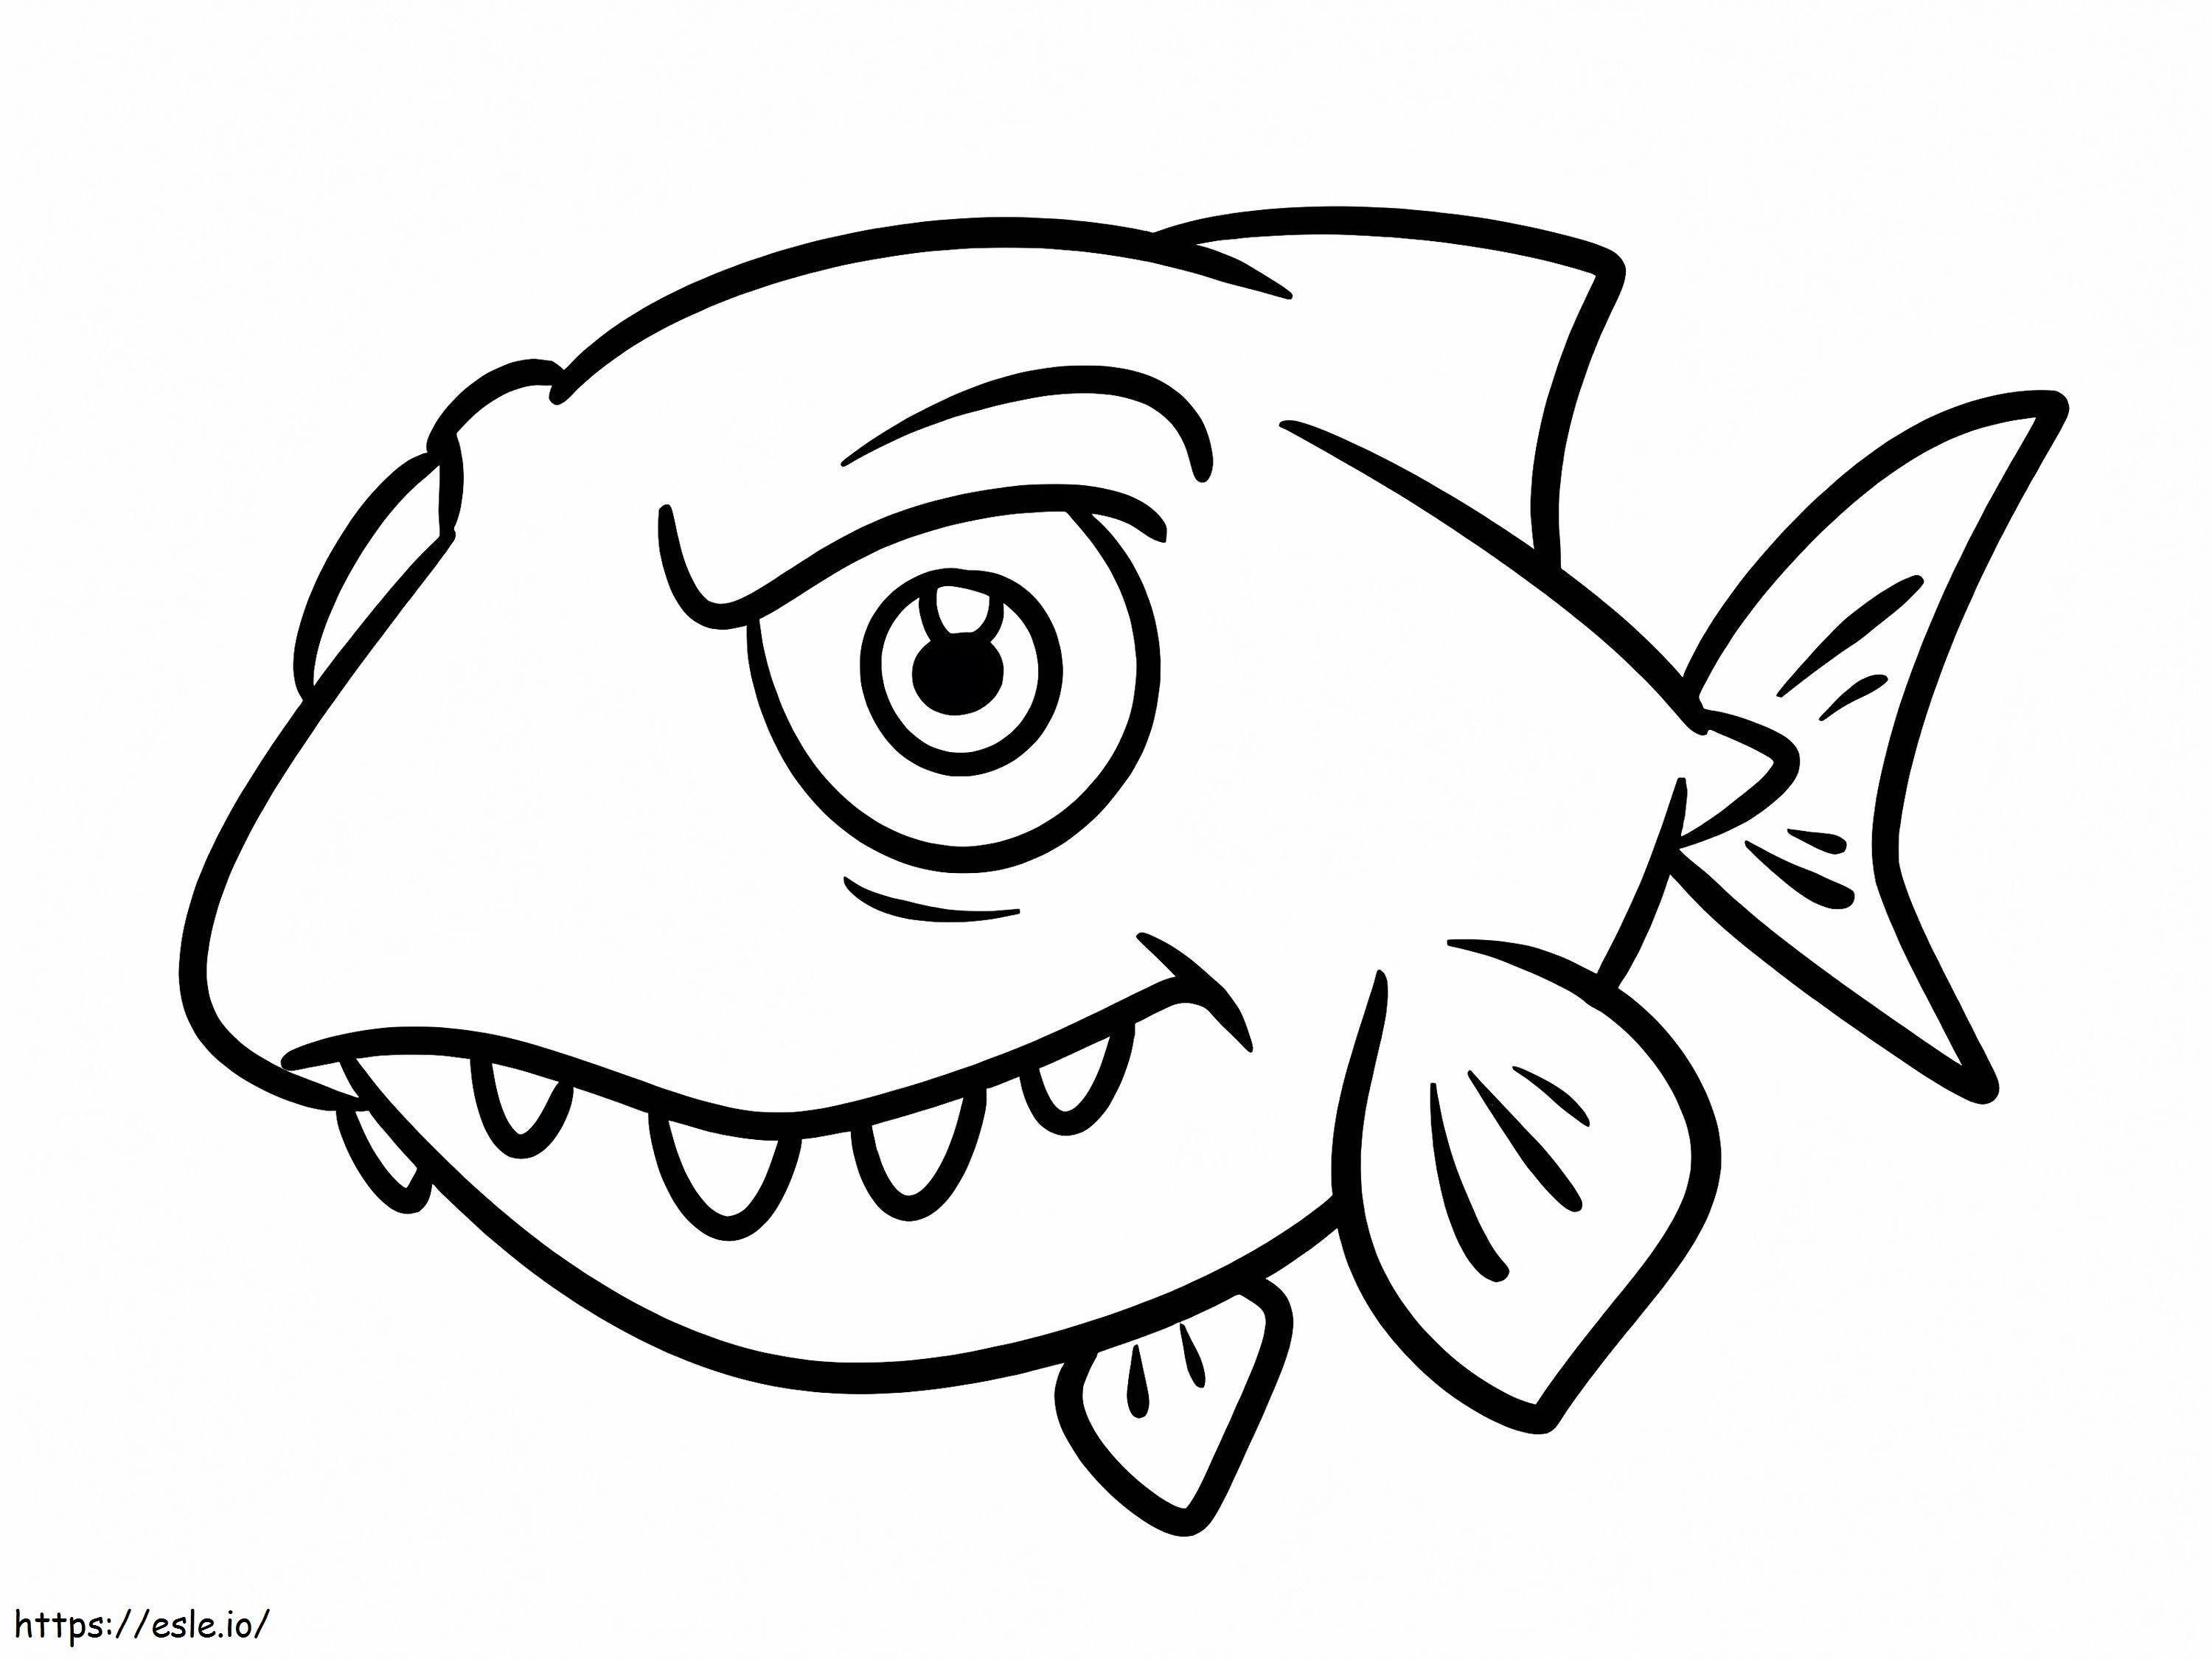 Cartoon Piranha Fish coloring page